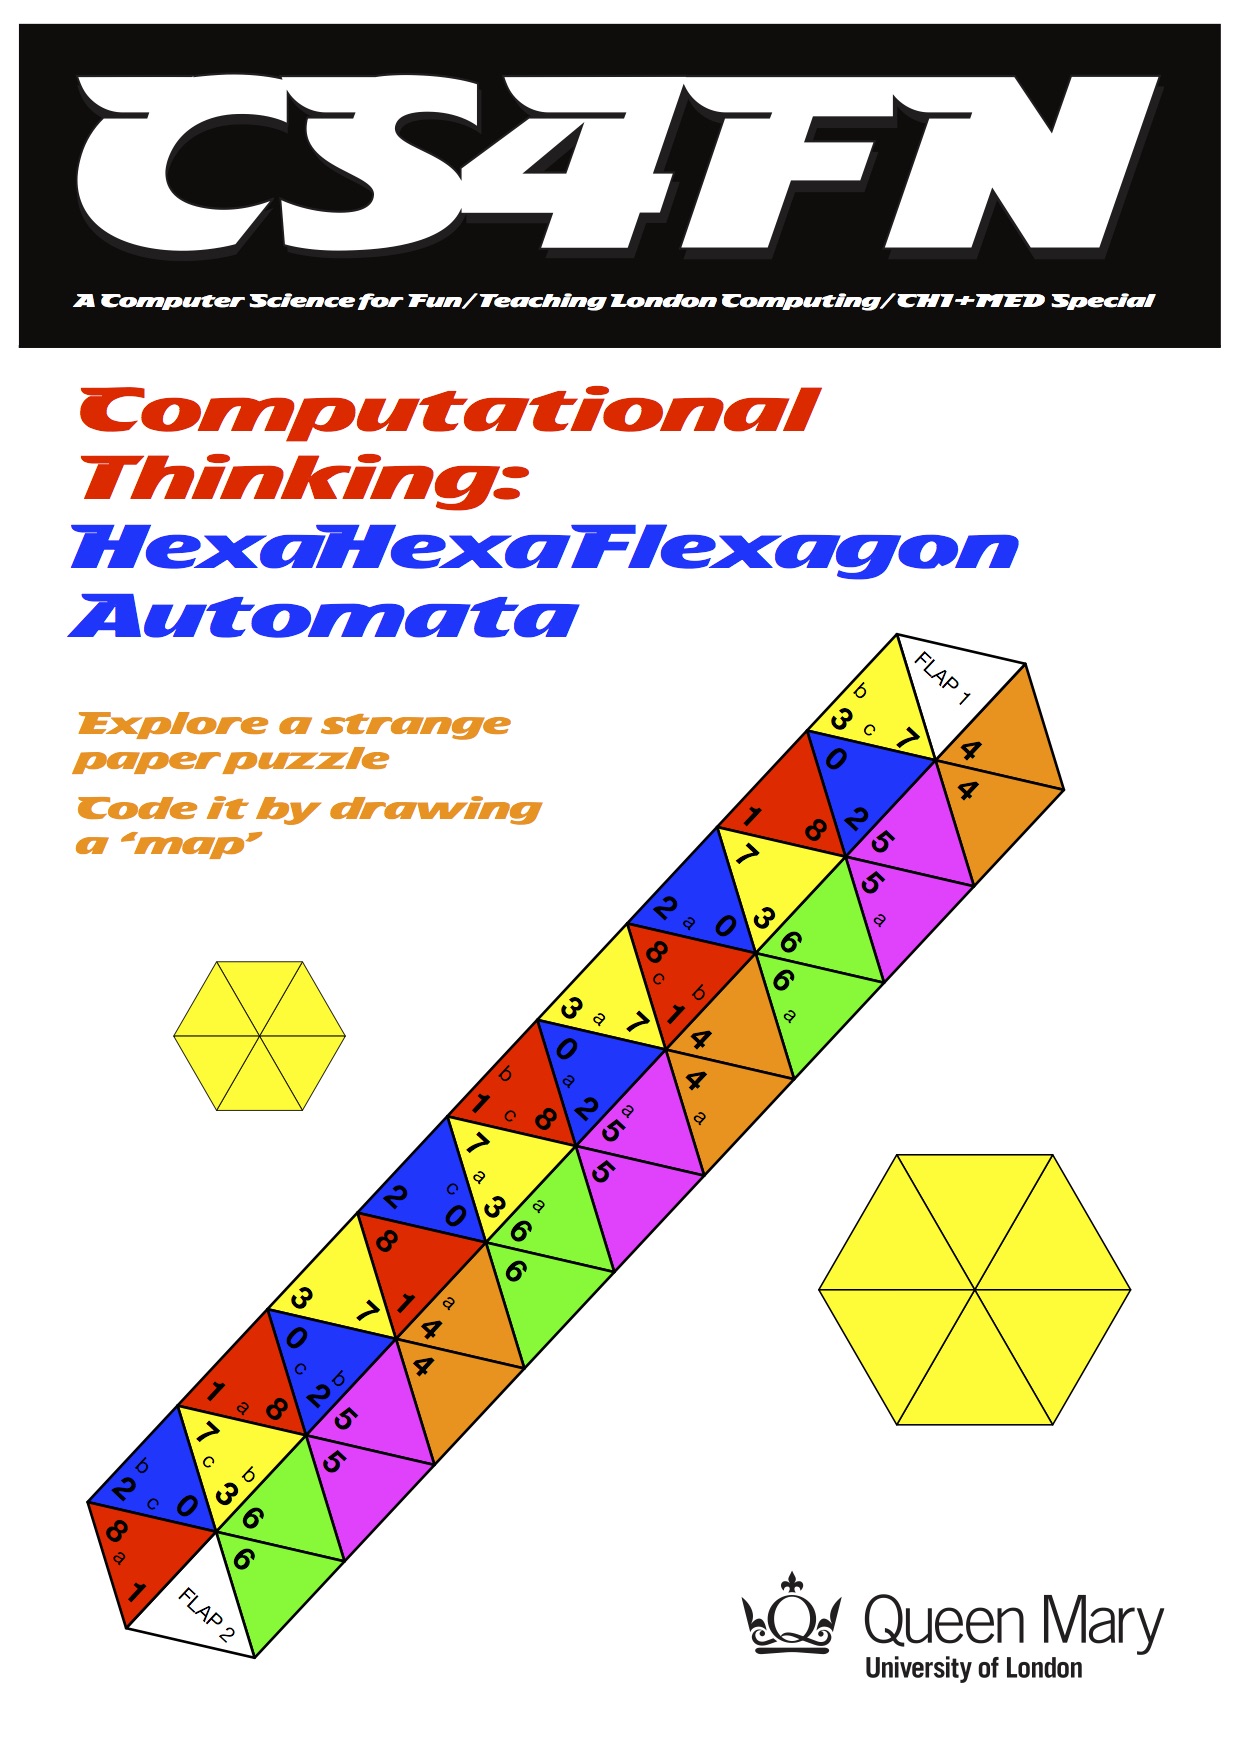 The cover of the hexahexaflexagon booklet